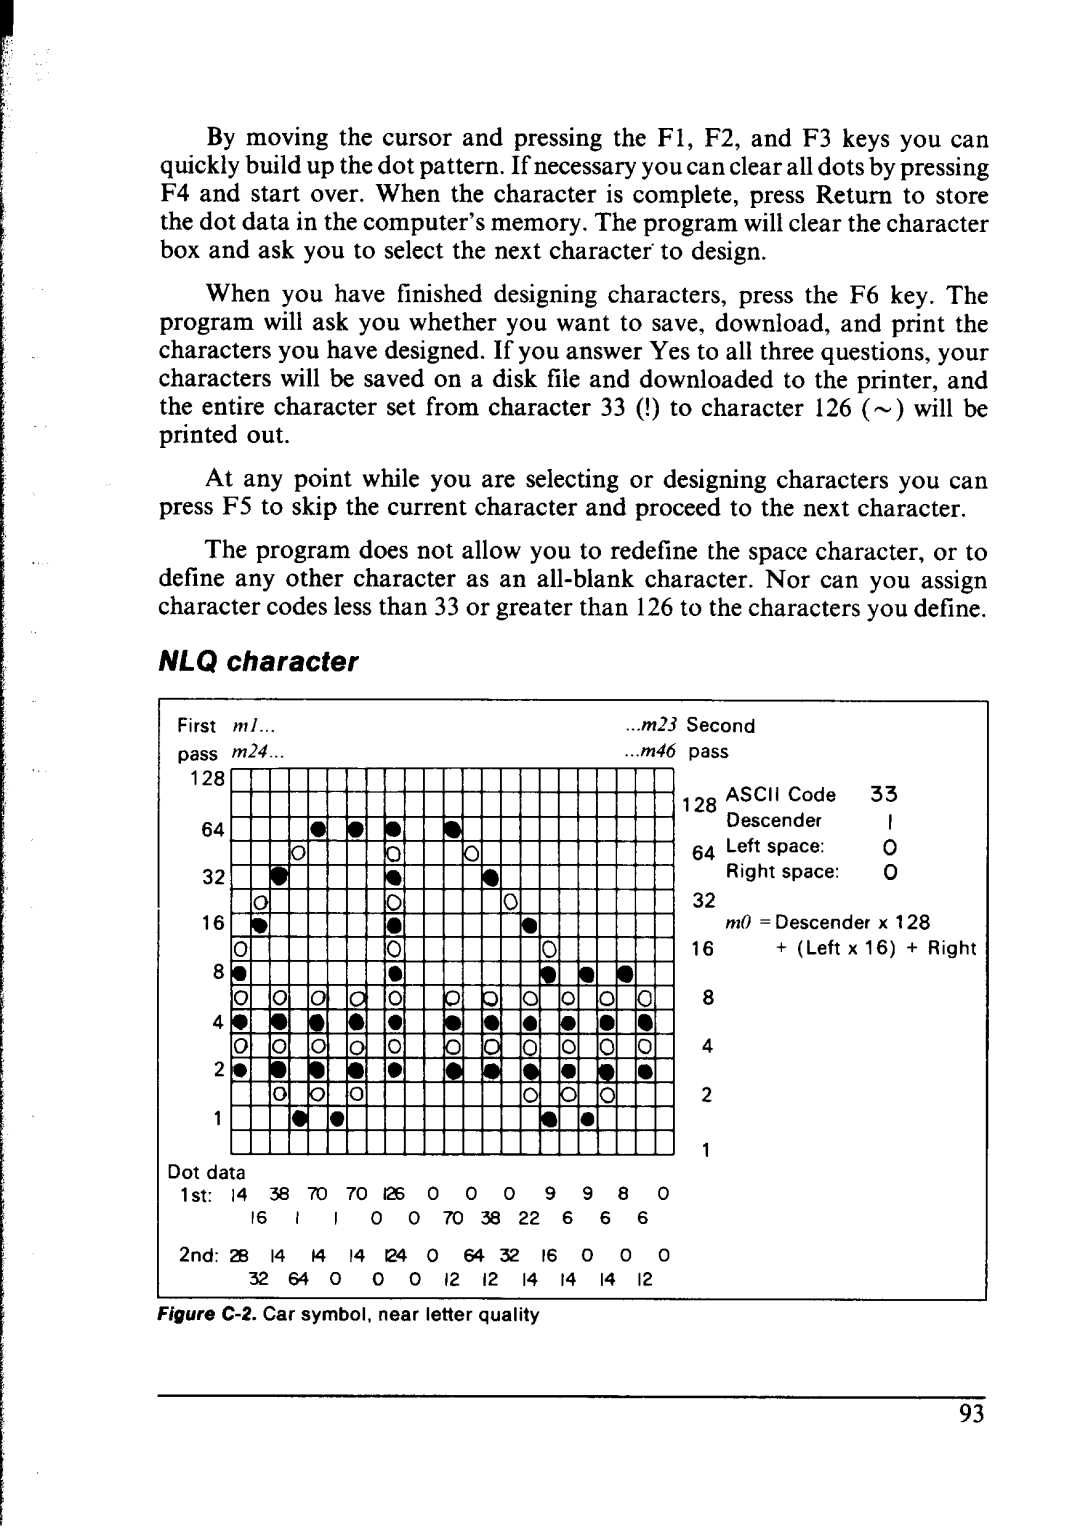 Star Micronics NX-1000 manual NLQ character, lot data 